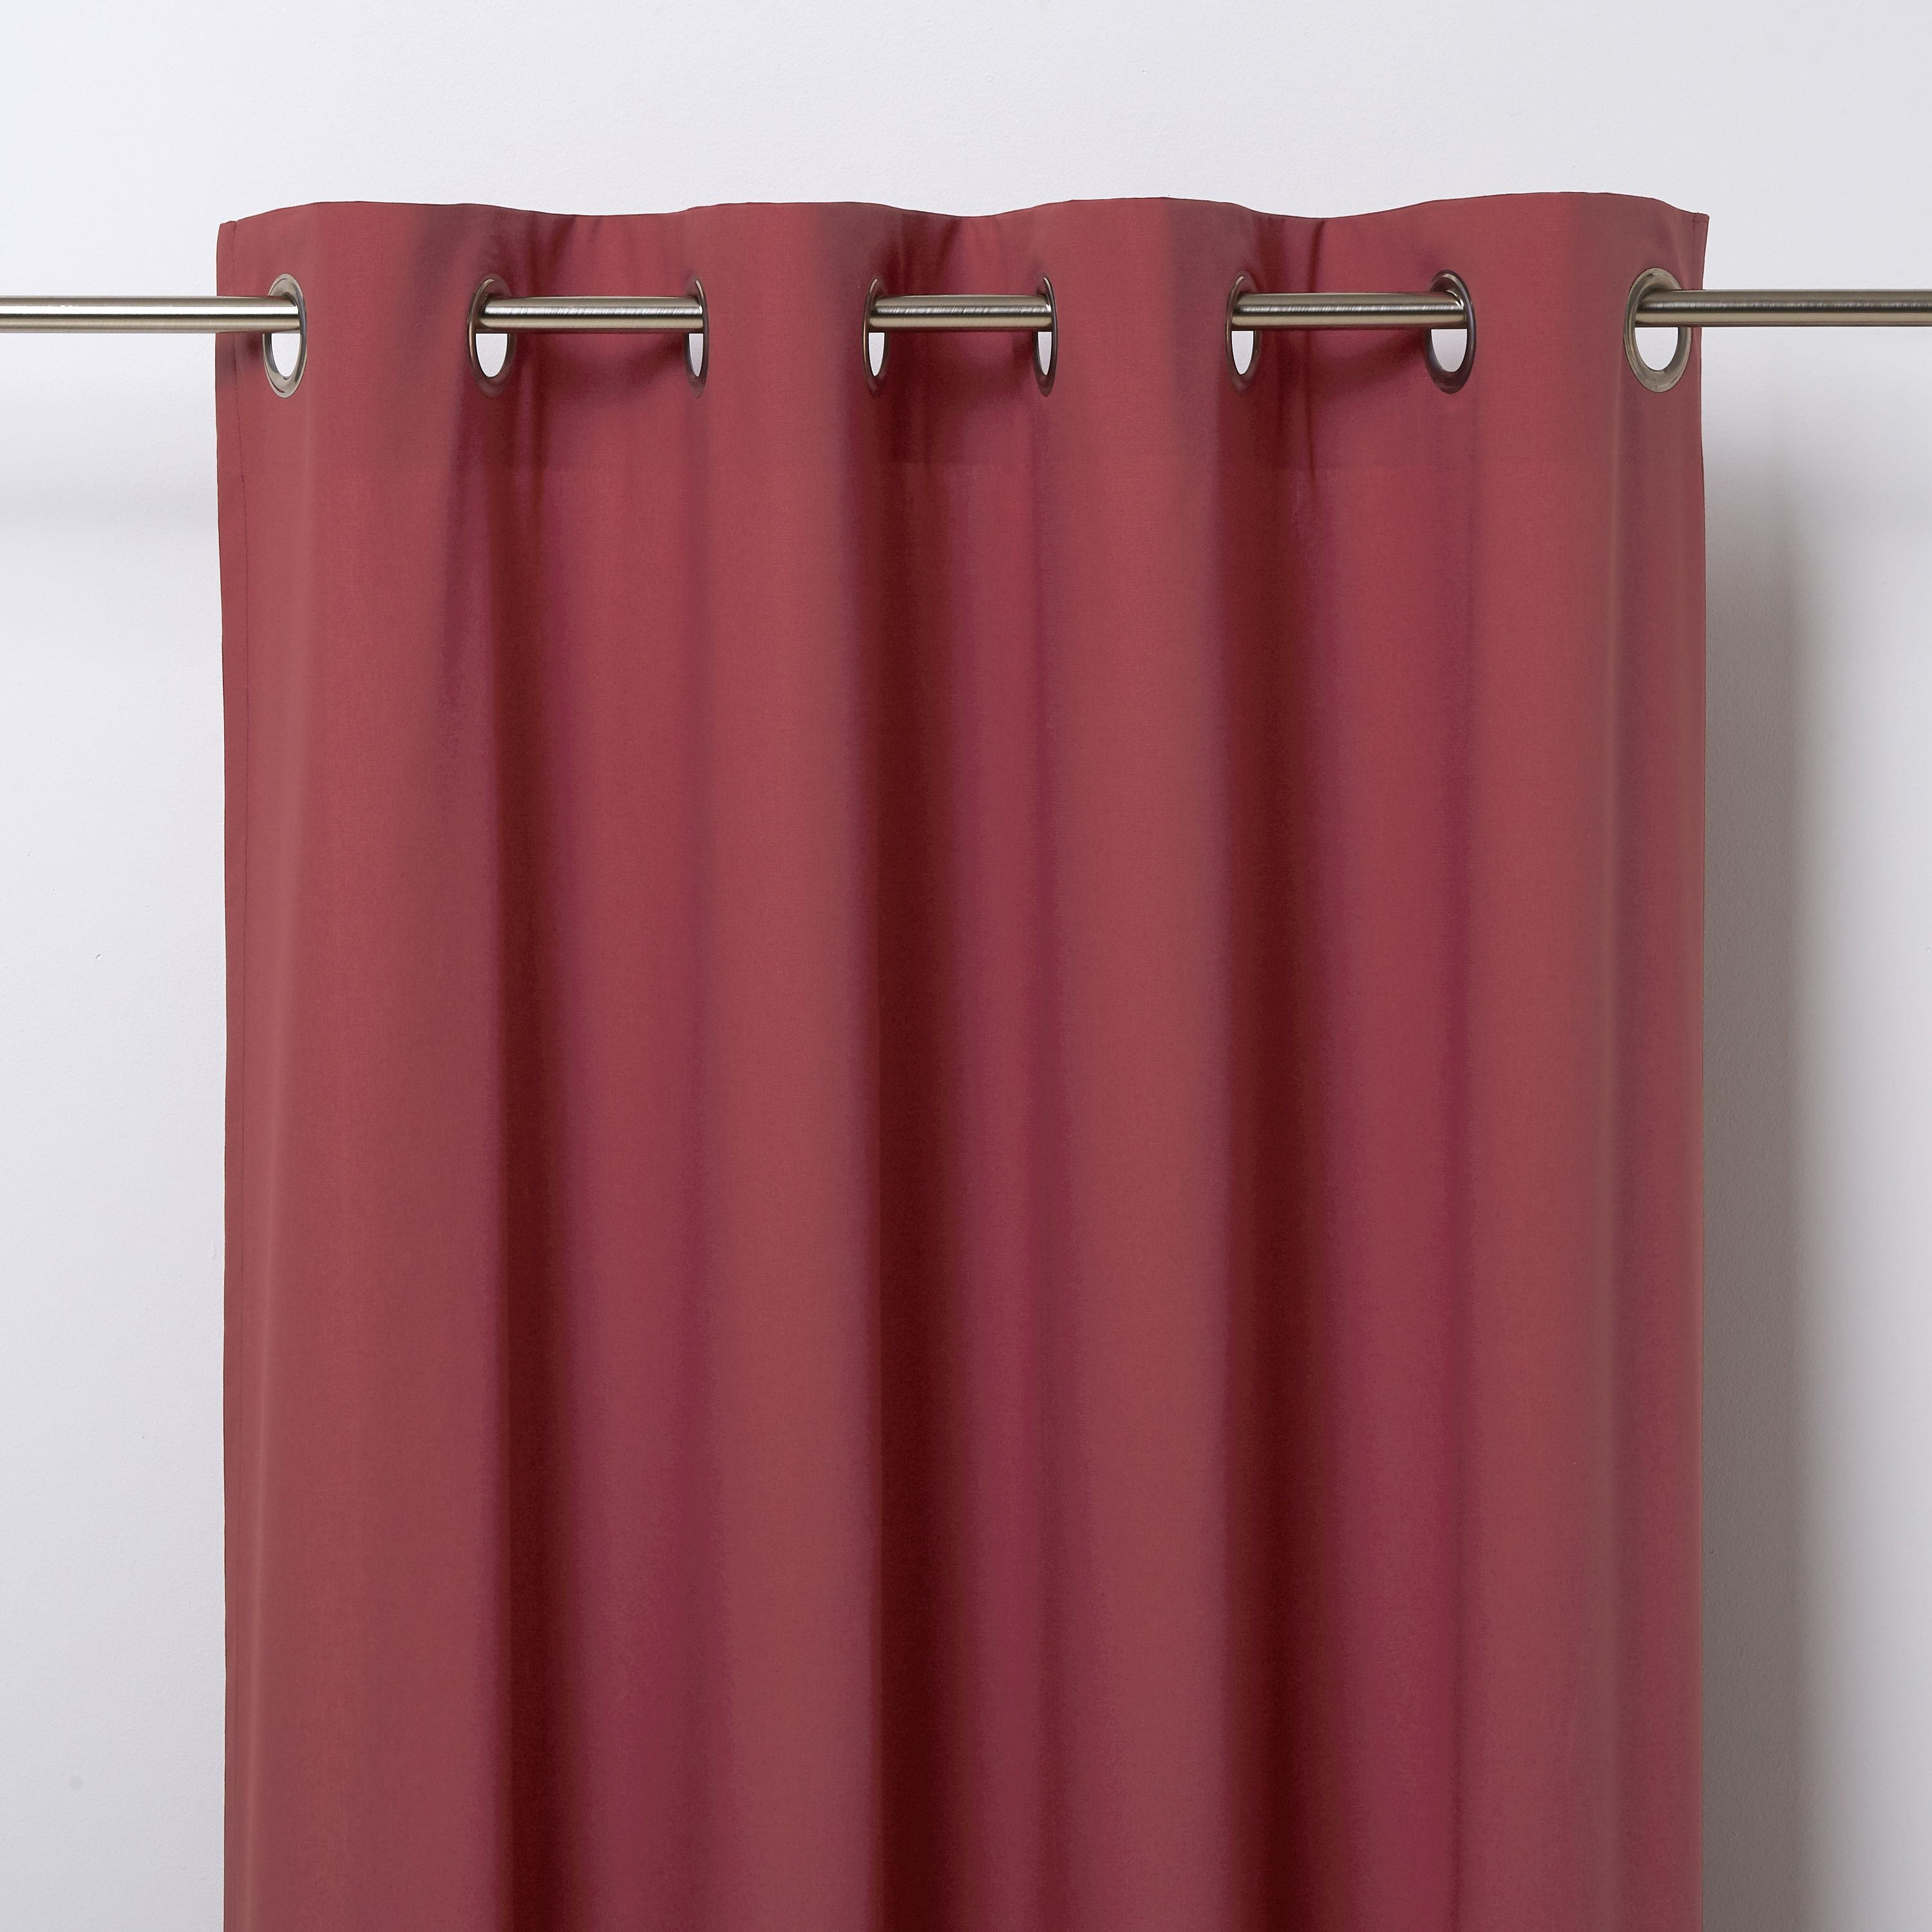 GoodHome Hiva Red Plain Unlined Eyelet Curtain (W)140Cm (L)260Cm, Single